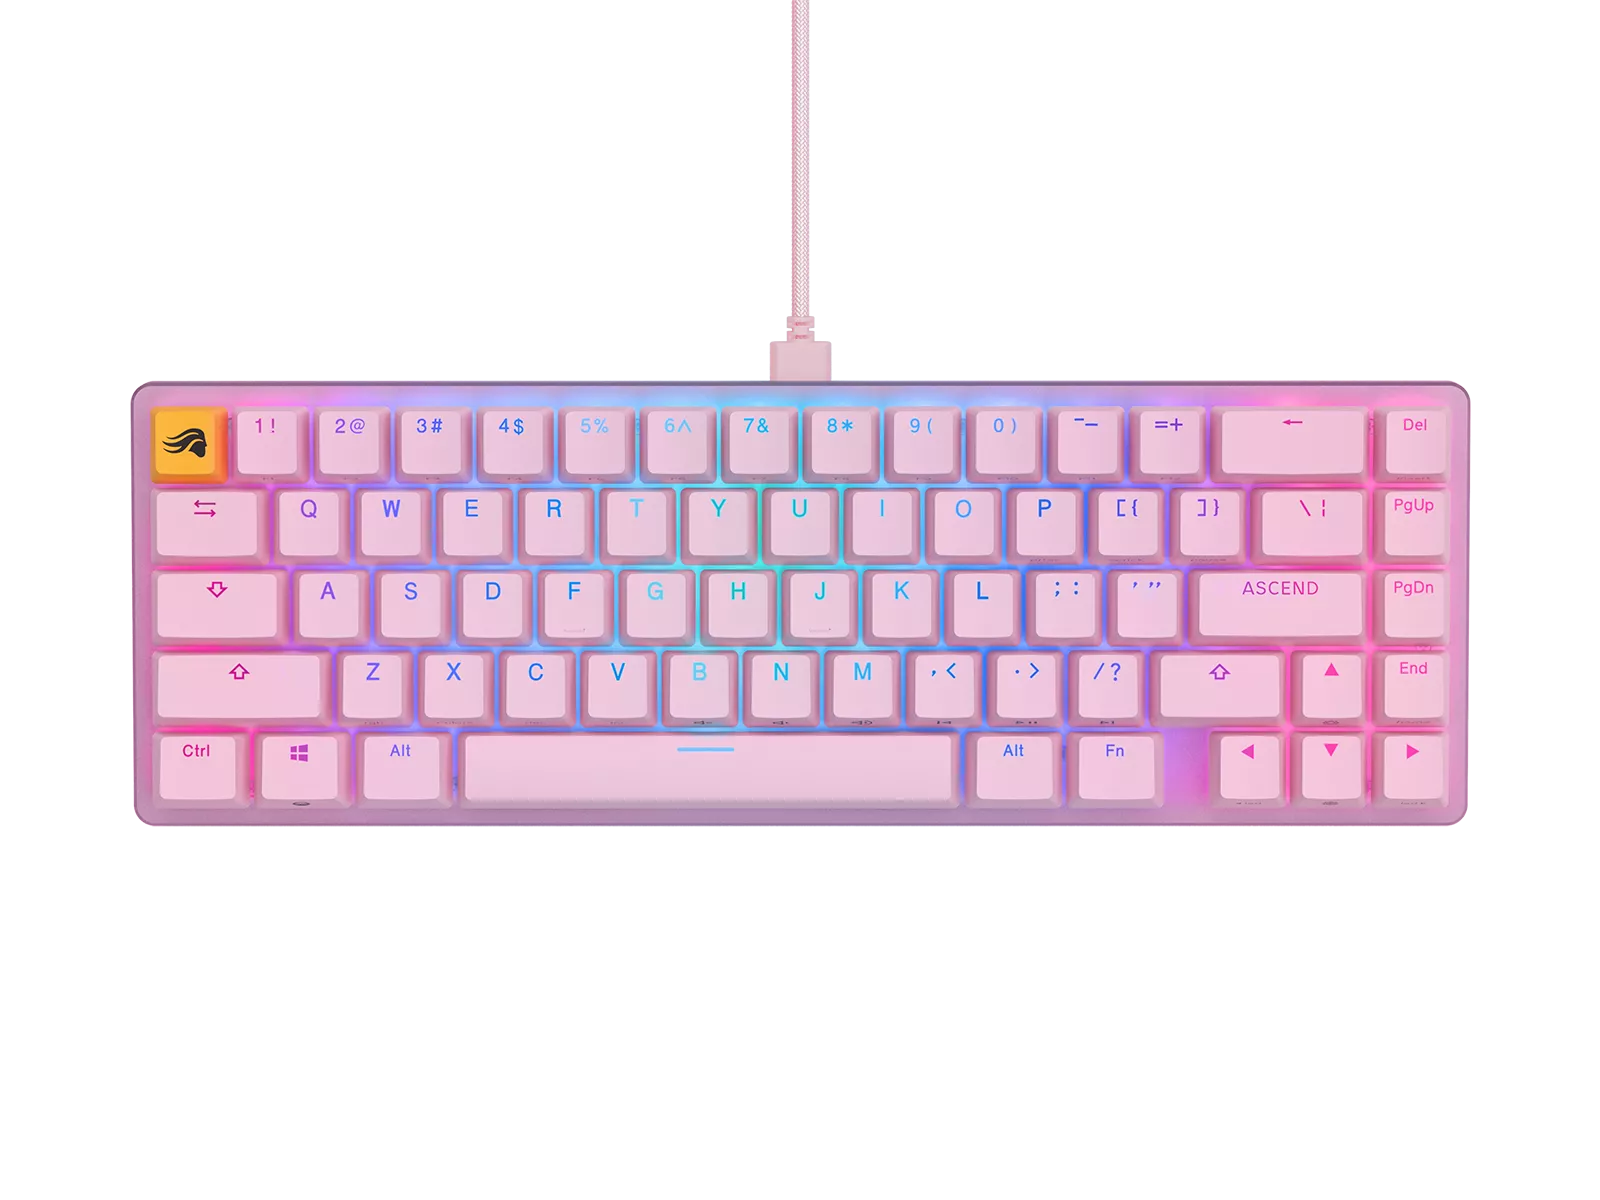 Glorious GMMK 2 Compact Mechanical Keyboard - Pink (Prebuilt)